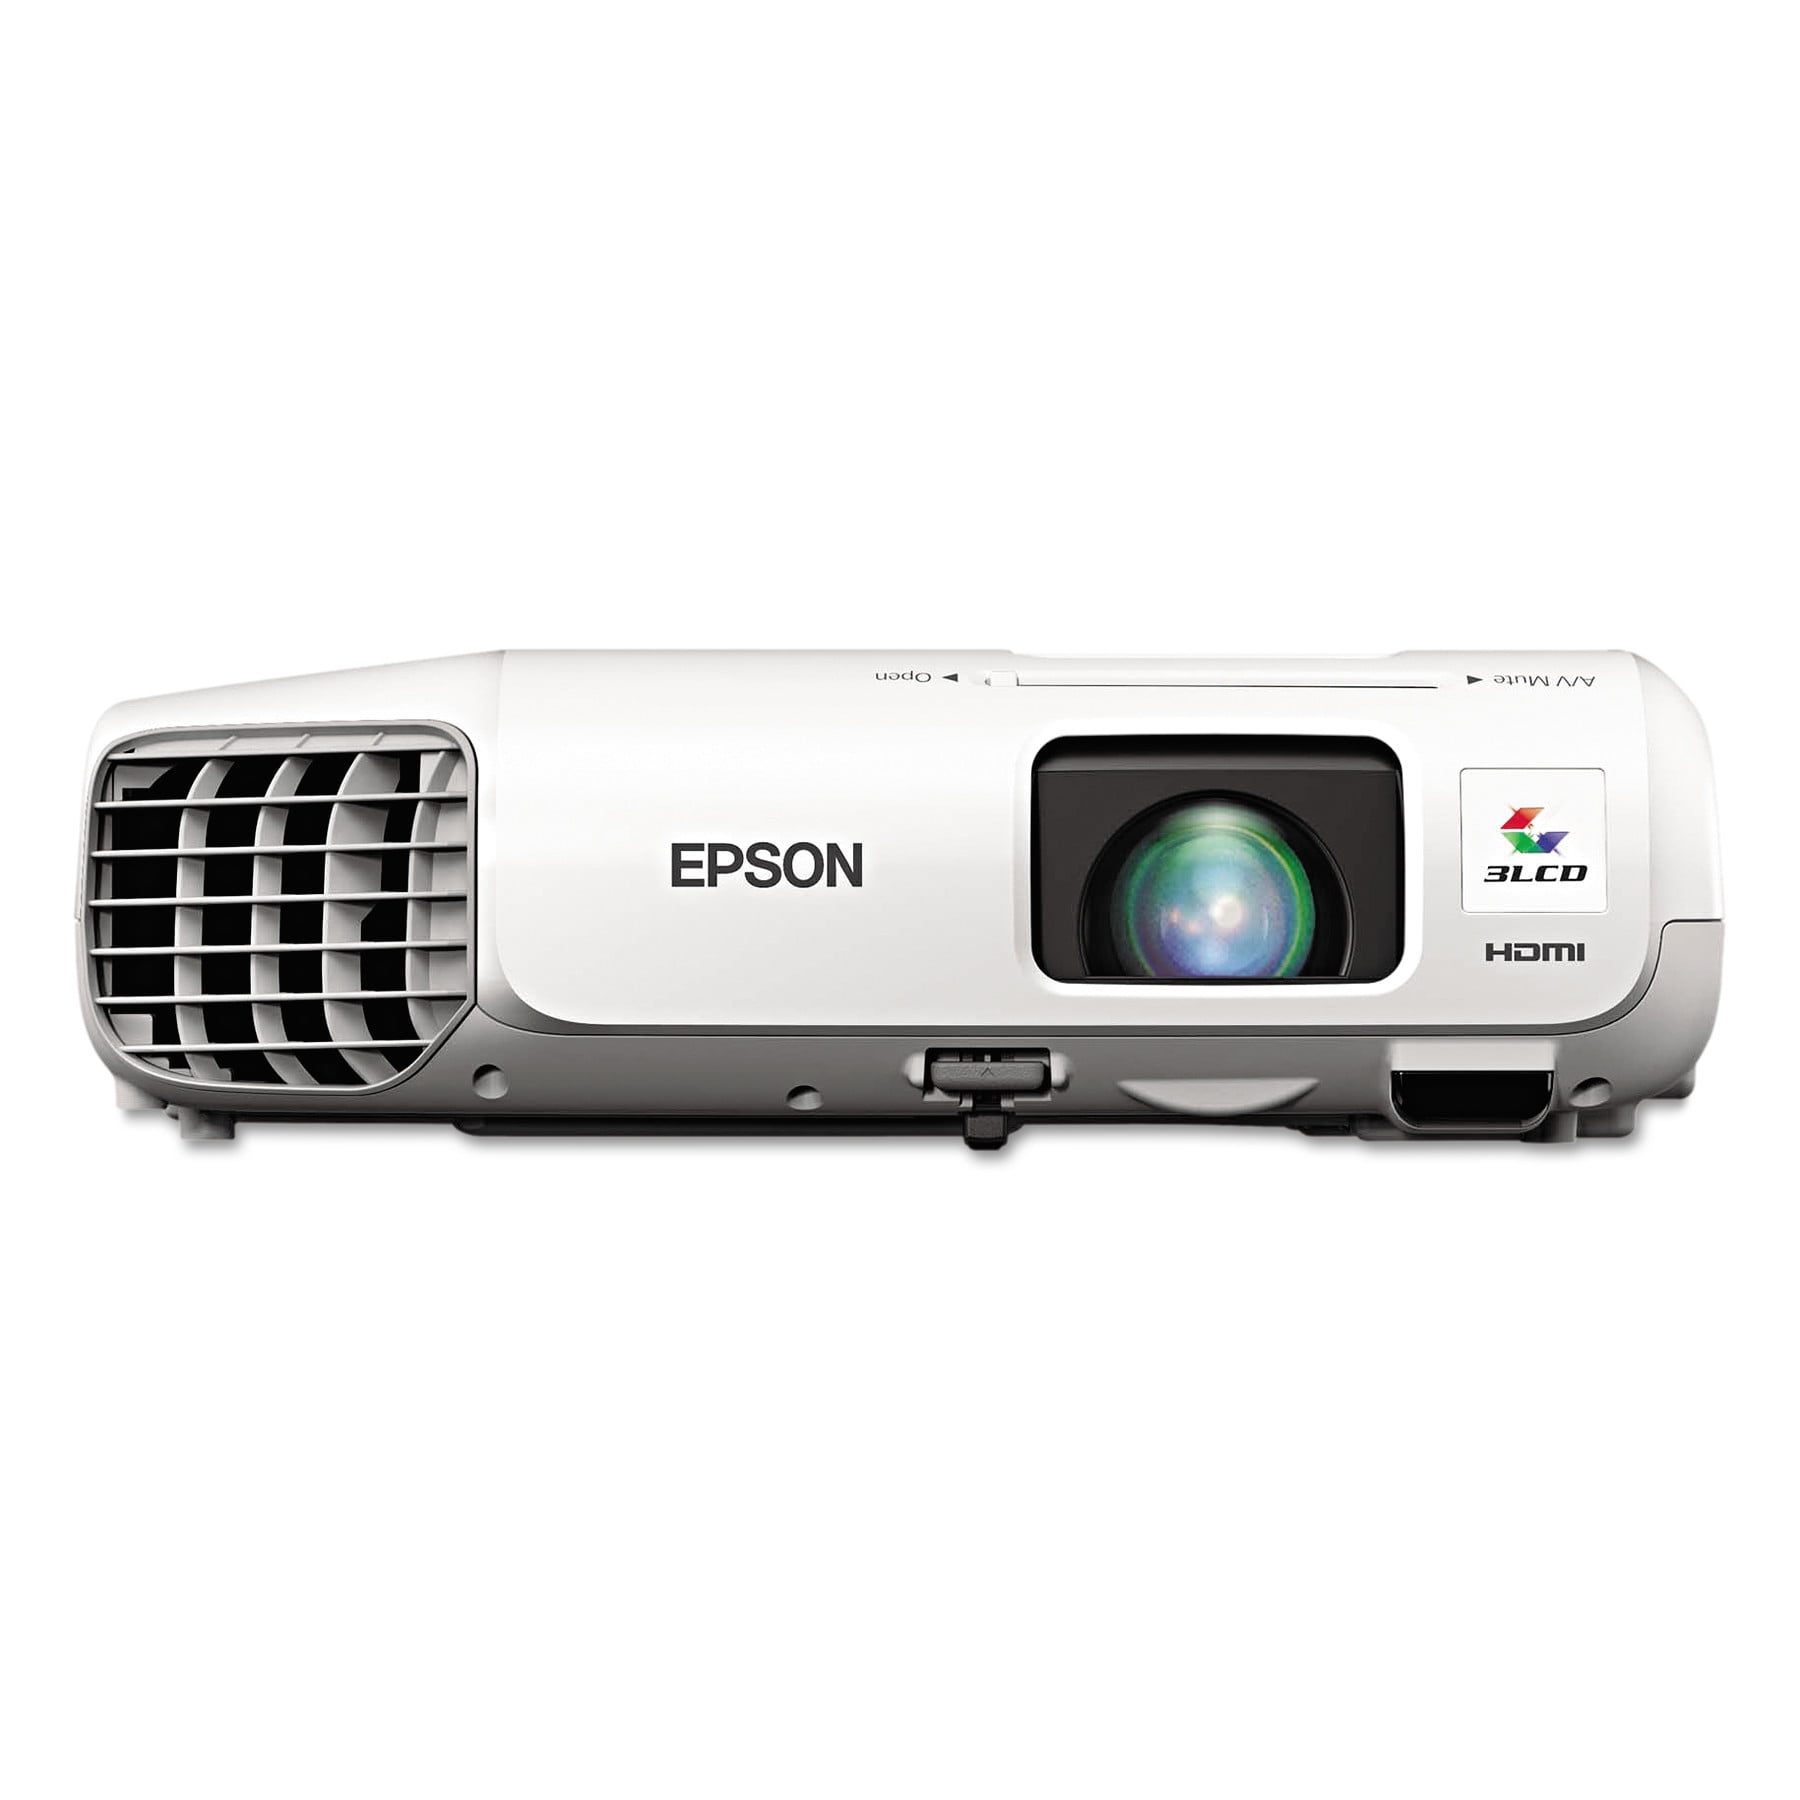 Epson Powerlite 965h Xga 3lcd Projector 3500 Lumens 1024 X 768 Pixels 1 6 X Zoom Walmart Com Walmart Com